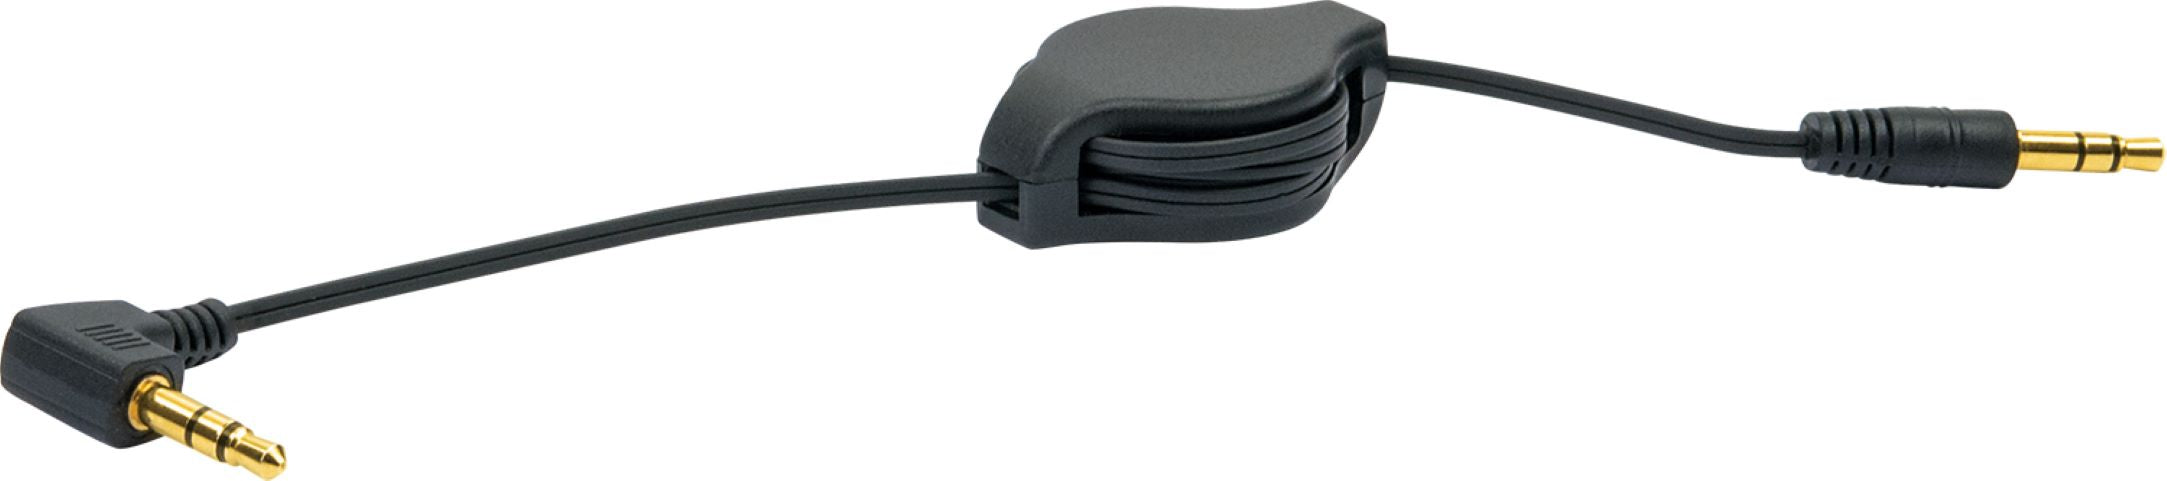 AUDIO connection cable (extendable)